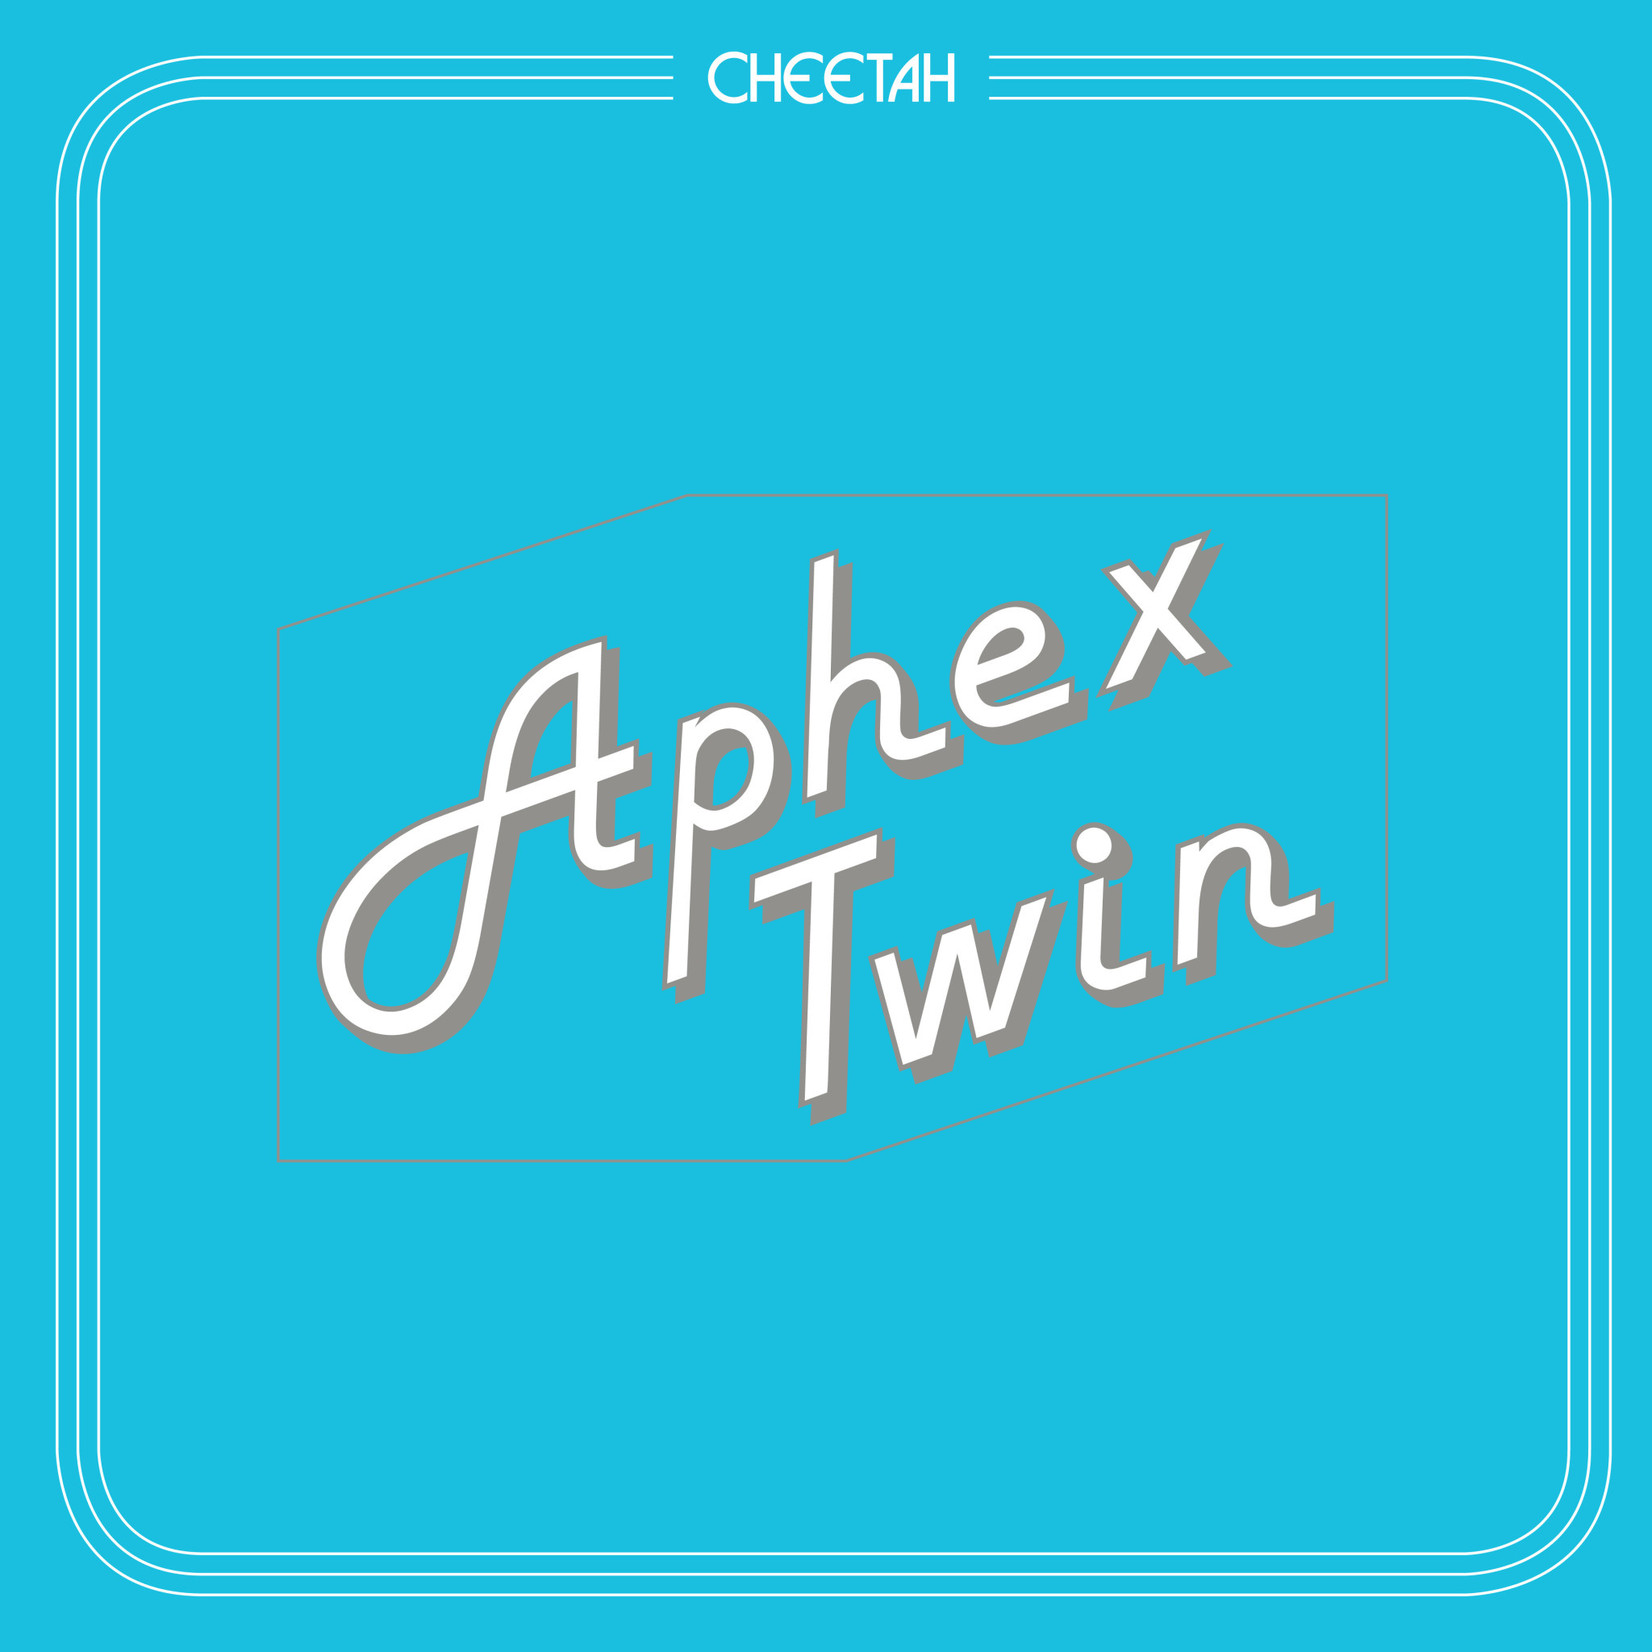 Warp Aphex Twin - Cheetah (12")